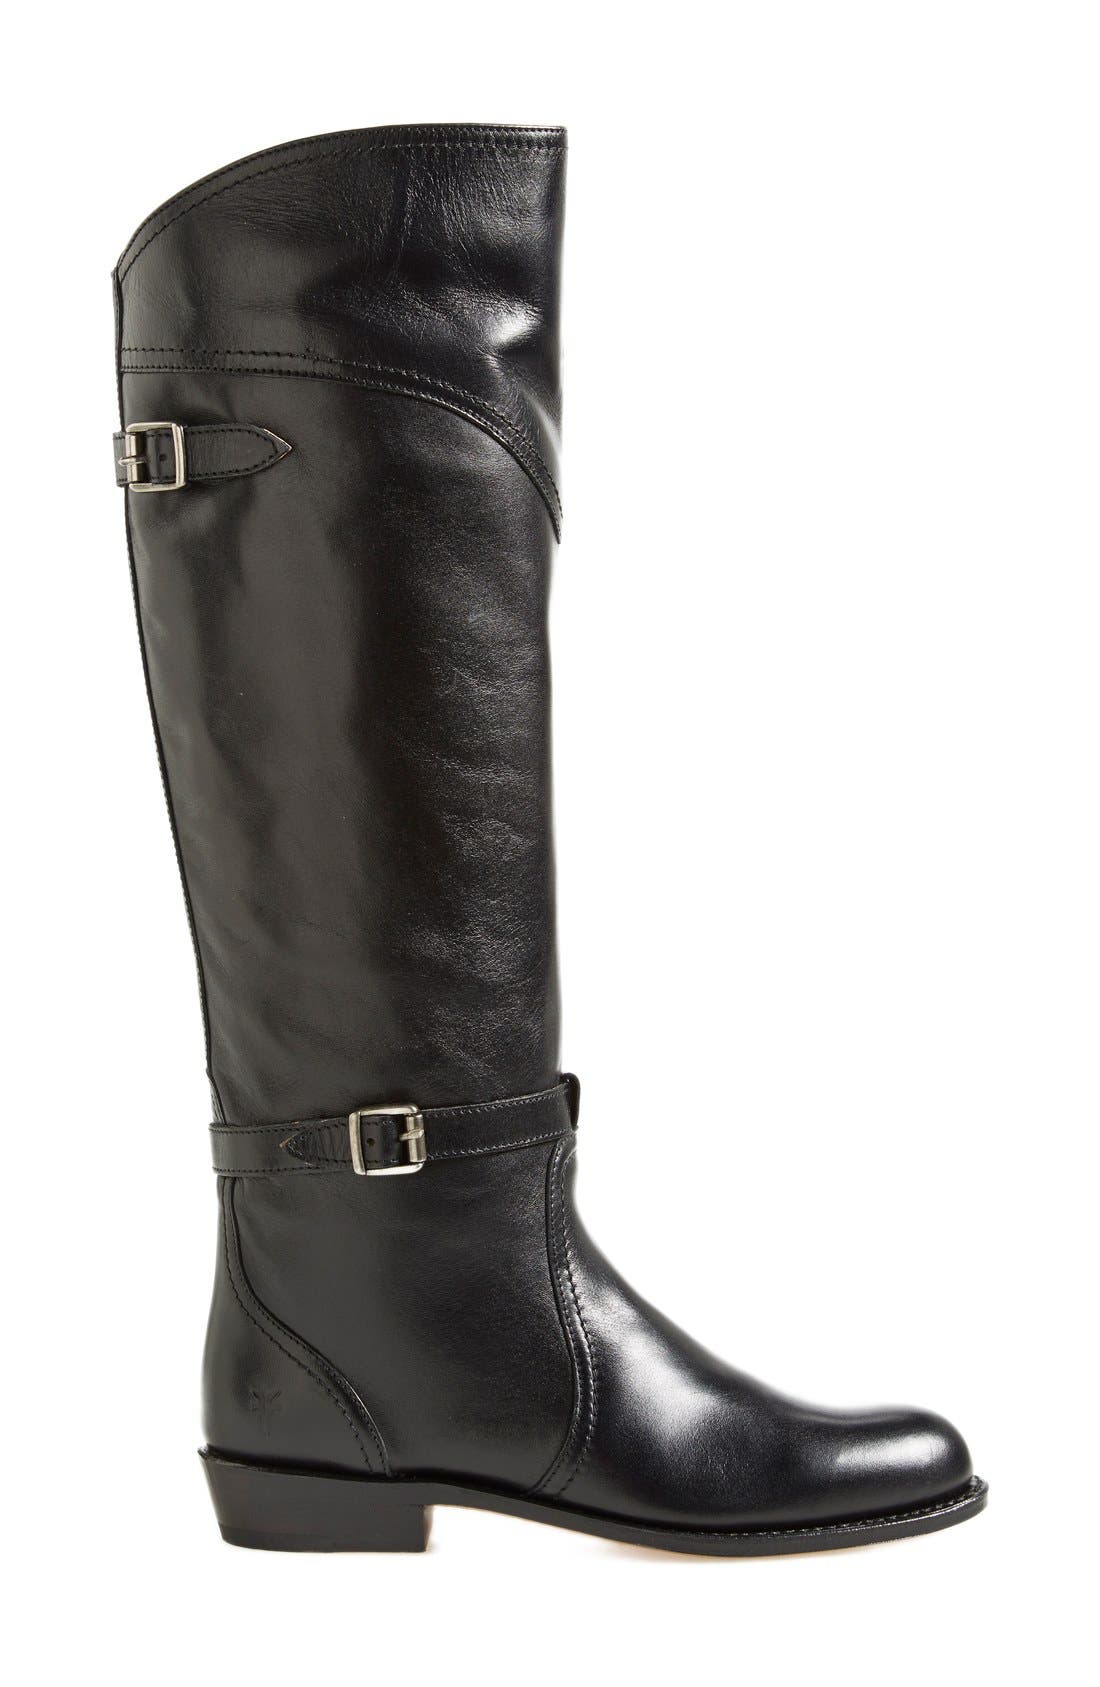 Frye 'Dorado' Leather Riding Boot 